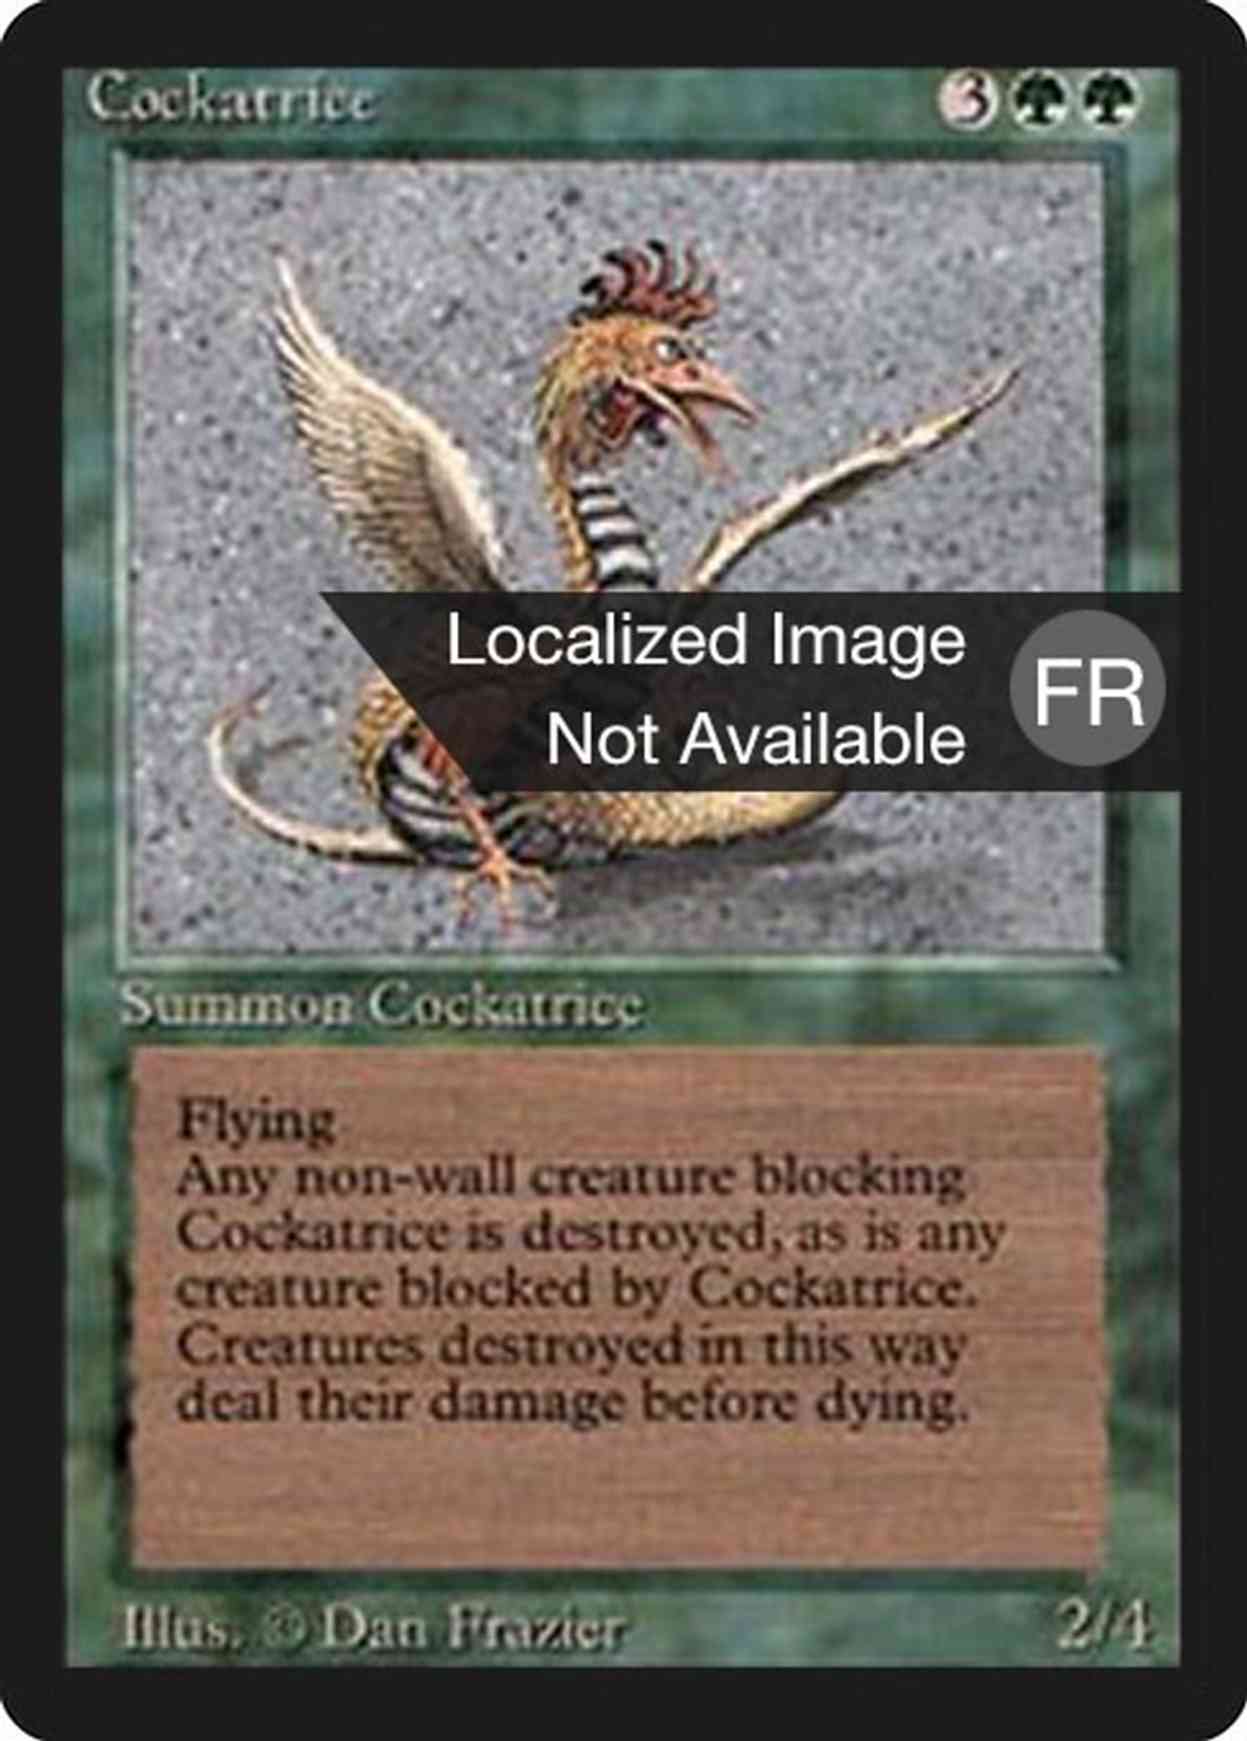 Cockatrice magic card front